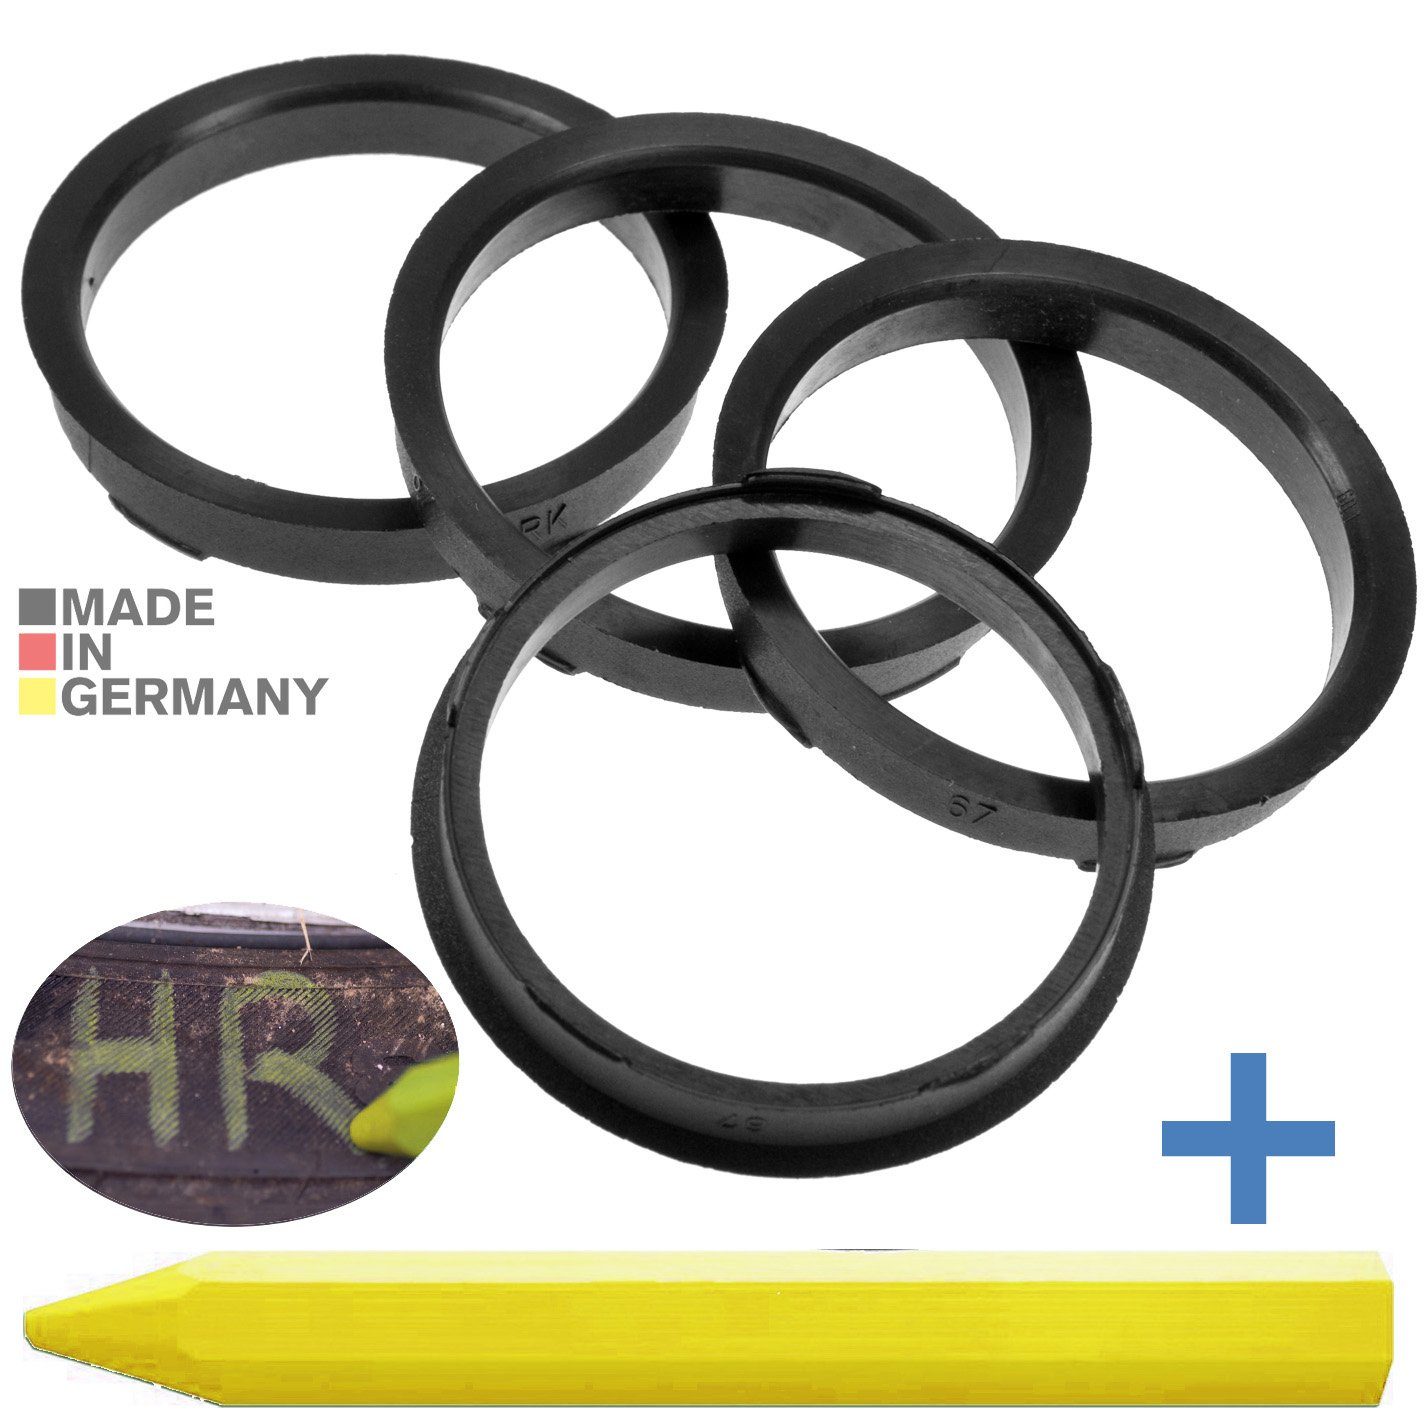 RKC Reifenstift 4X Zentrierringe Schwarz Felgen Ringe + 1x Reifen Kreide Fett Stift, Maße: 67,0 x 60,1 mm